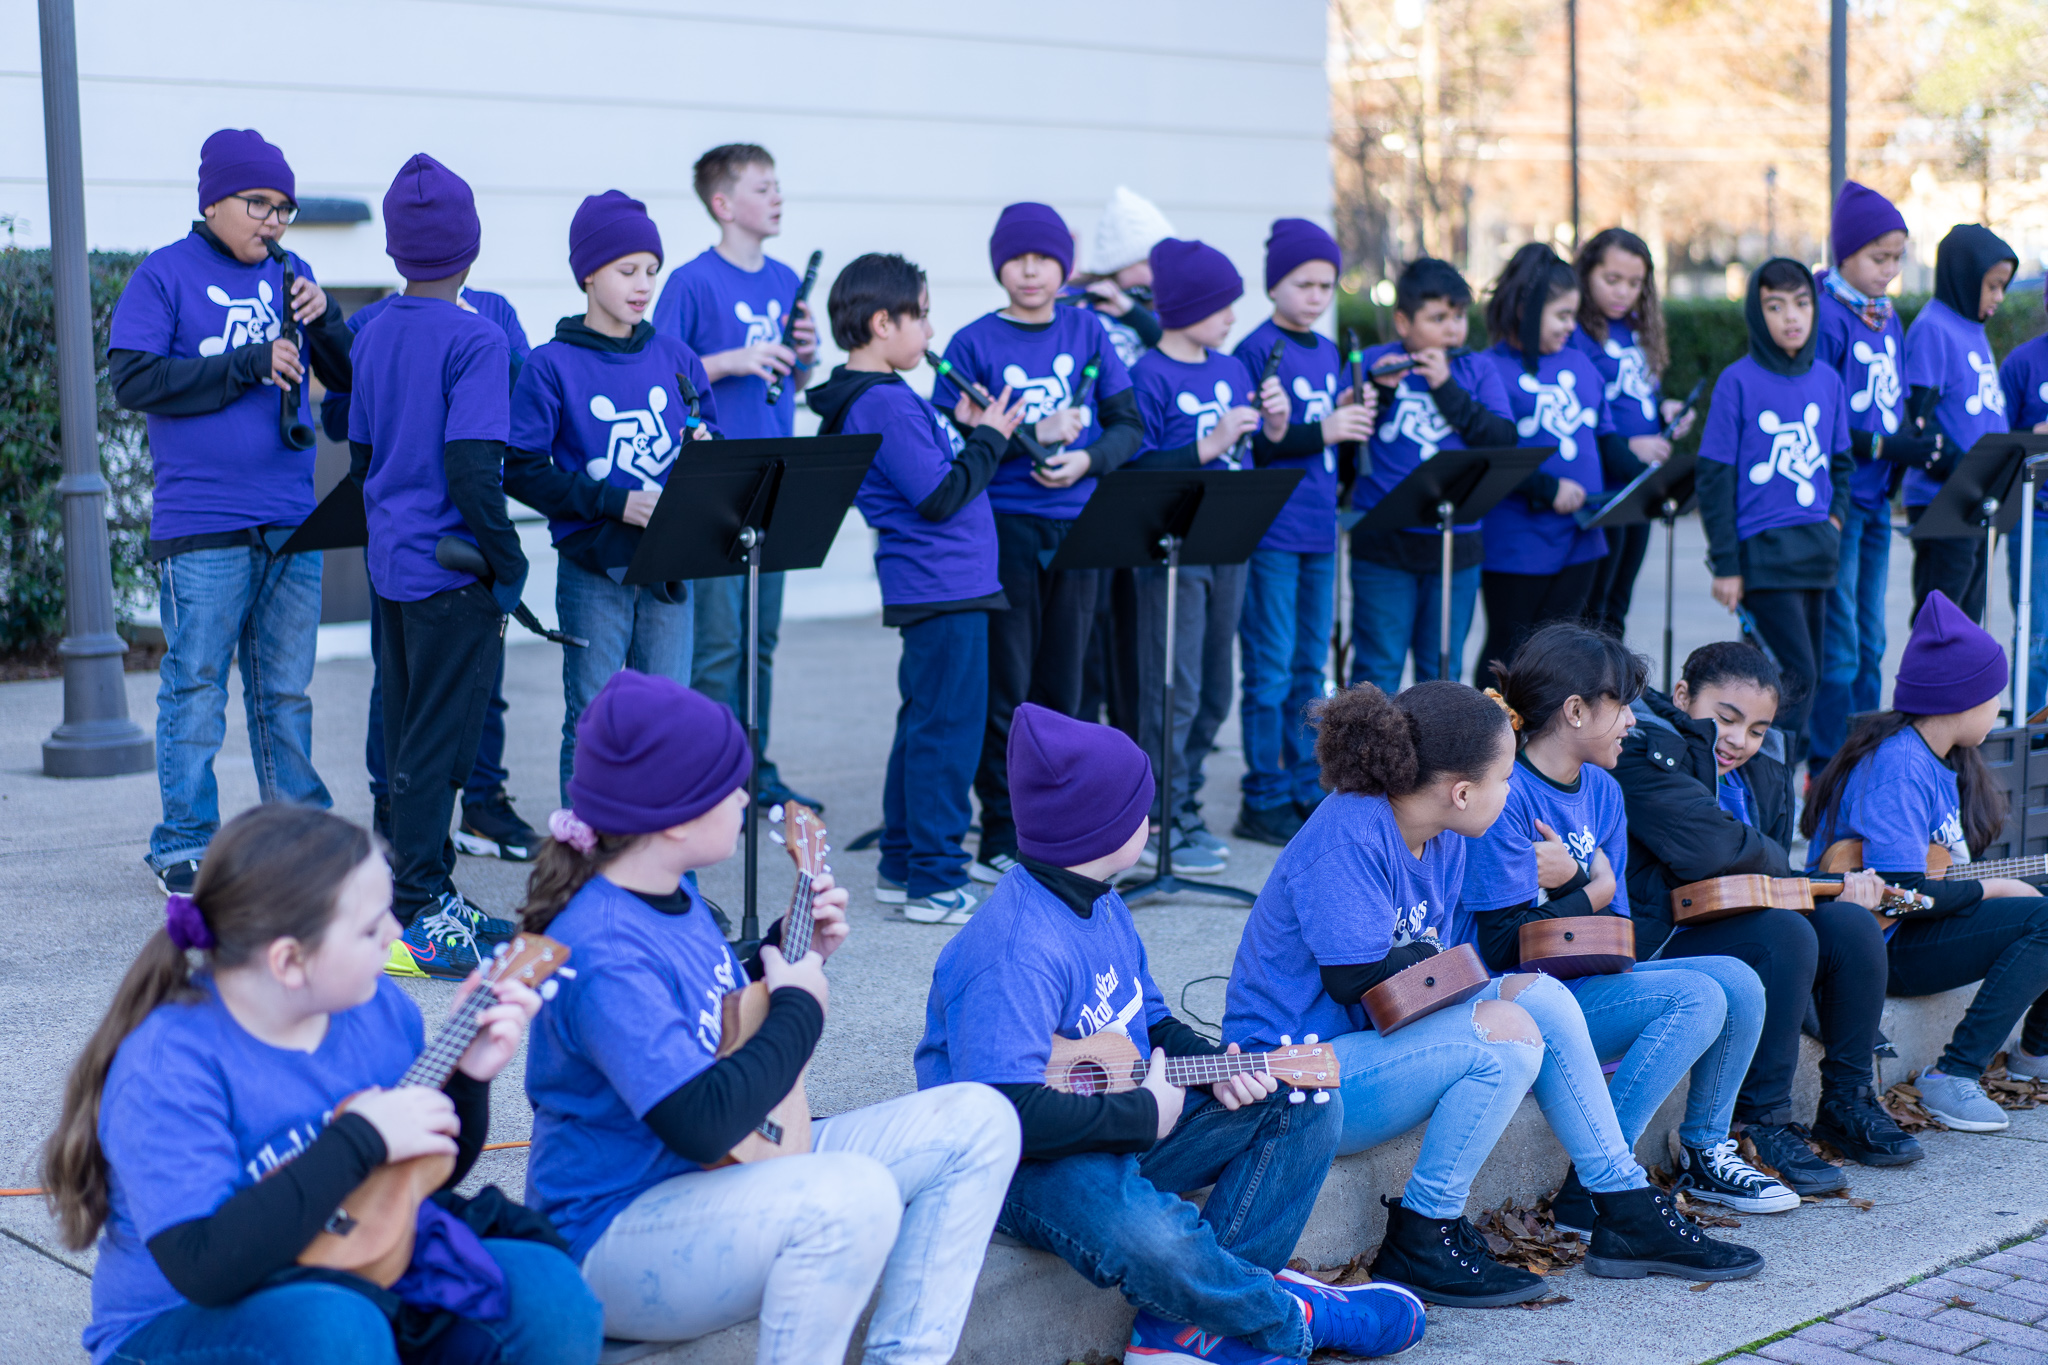 children wearing purple shirts and toboggans playing instruments 